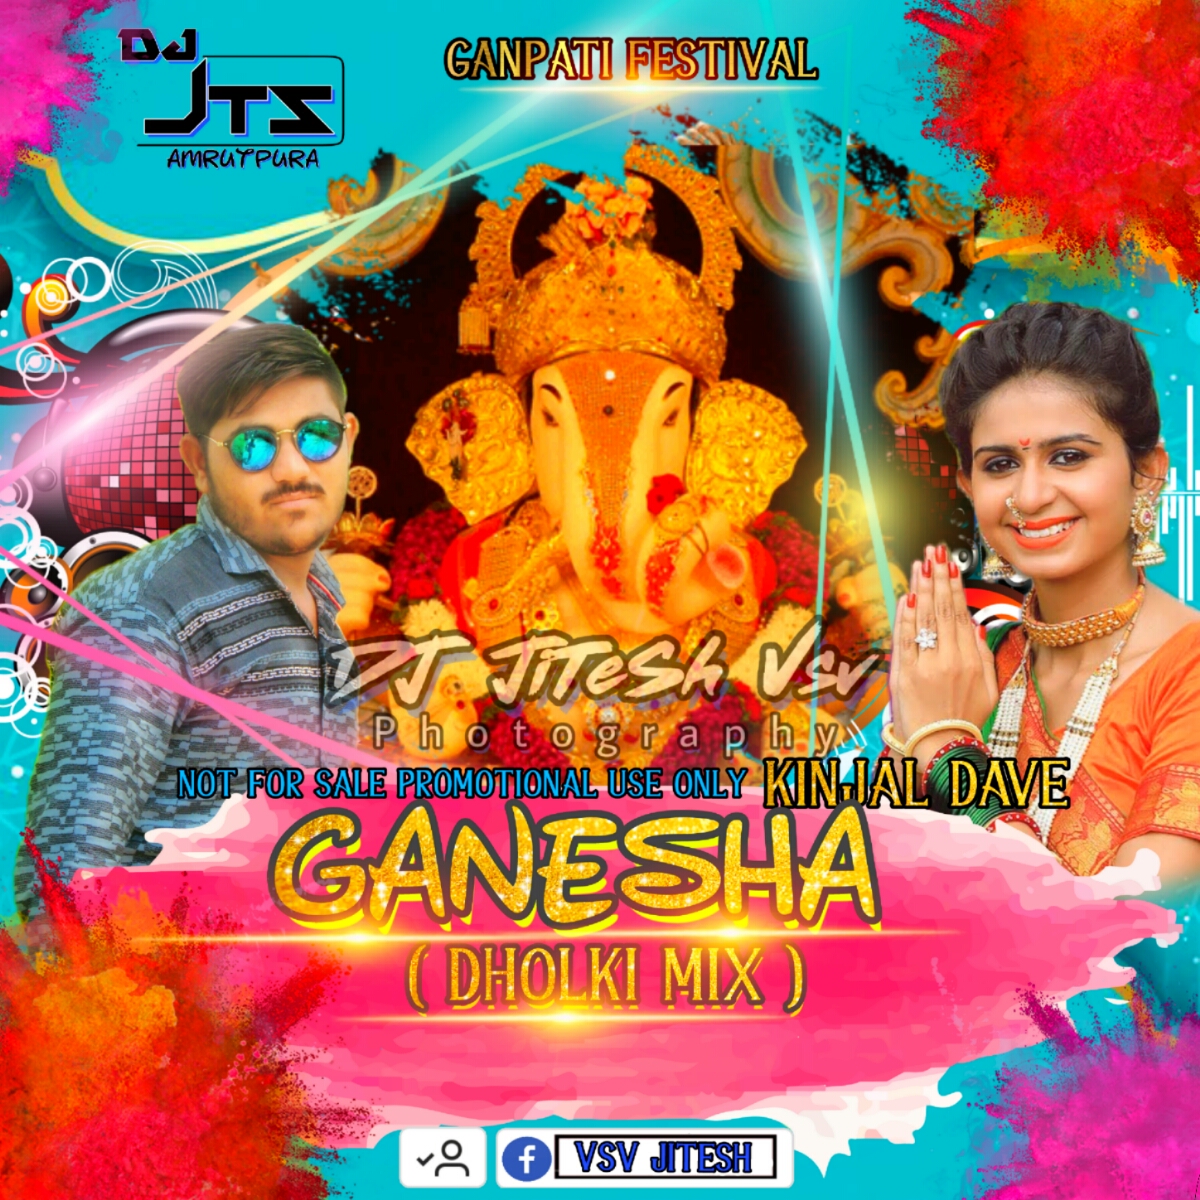 Ganesha ( Dholki Mix)dj Jts Aj Vsv , HD Wallpaper & Backgrounds